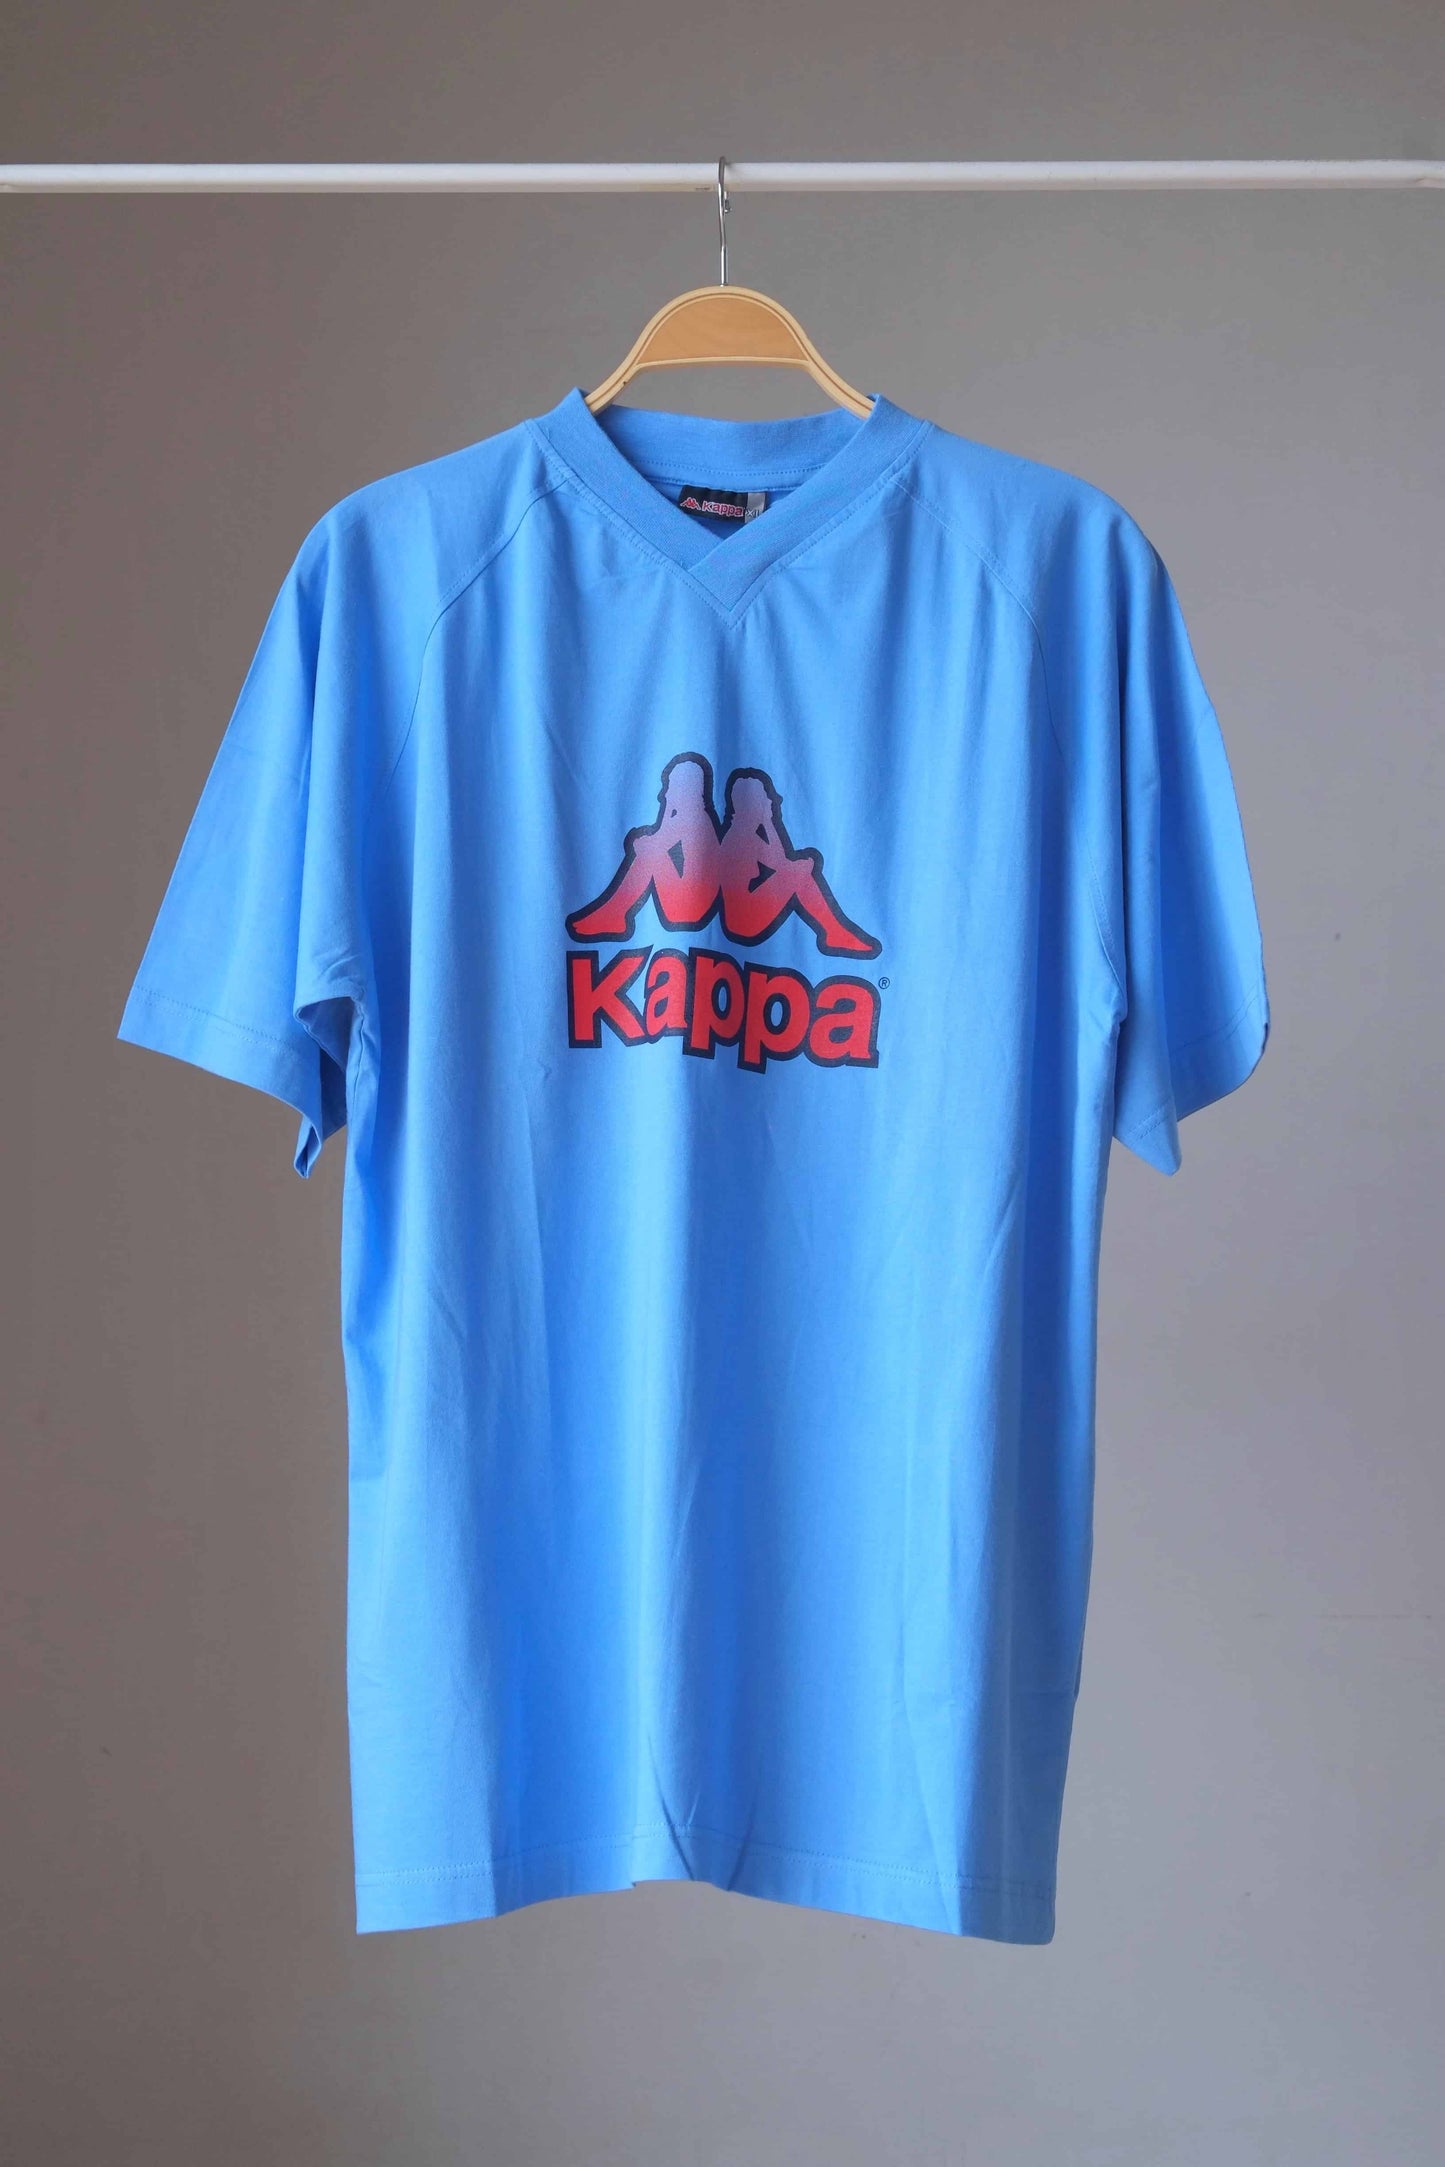 KAPPA 90's V-neck T-shirt blue